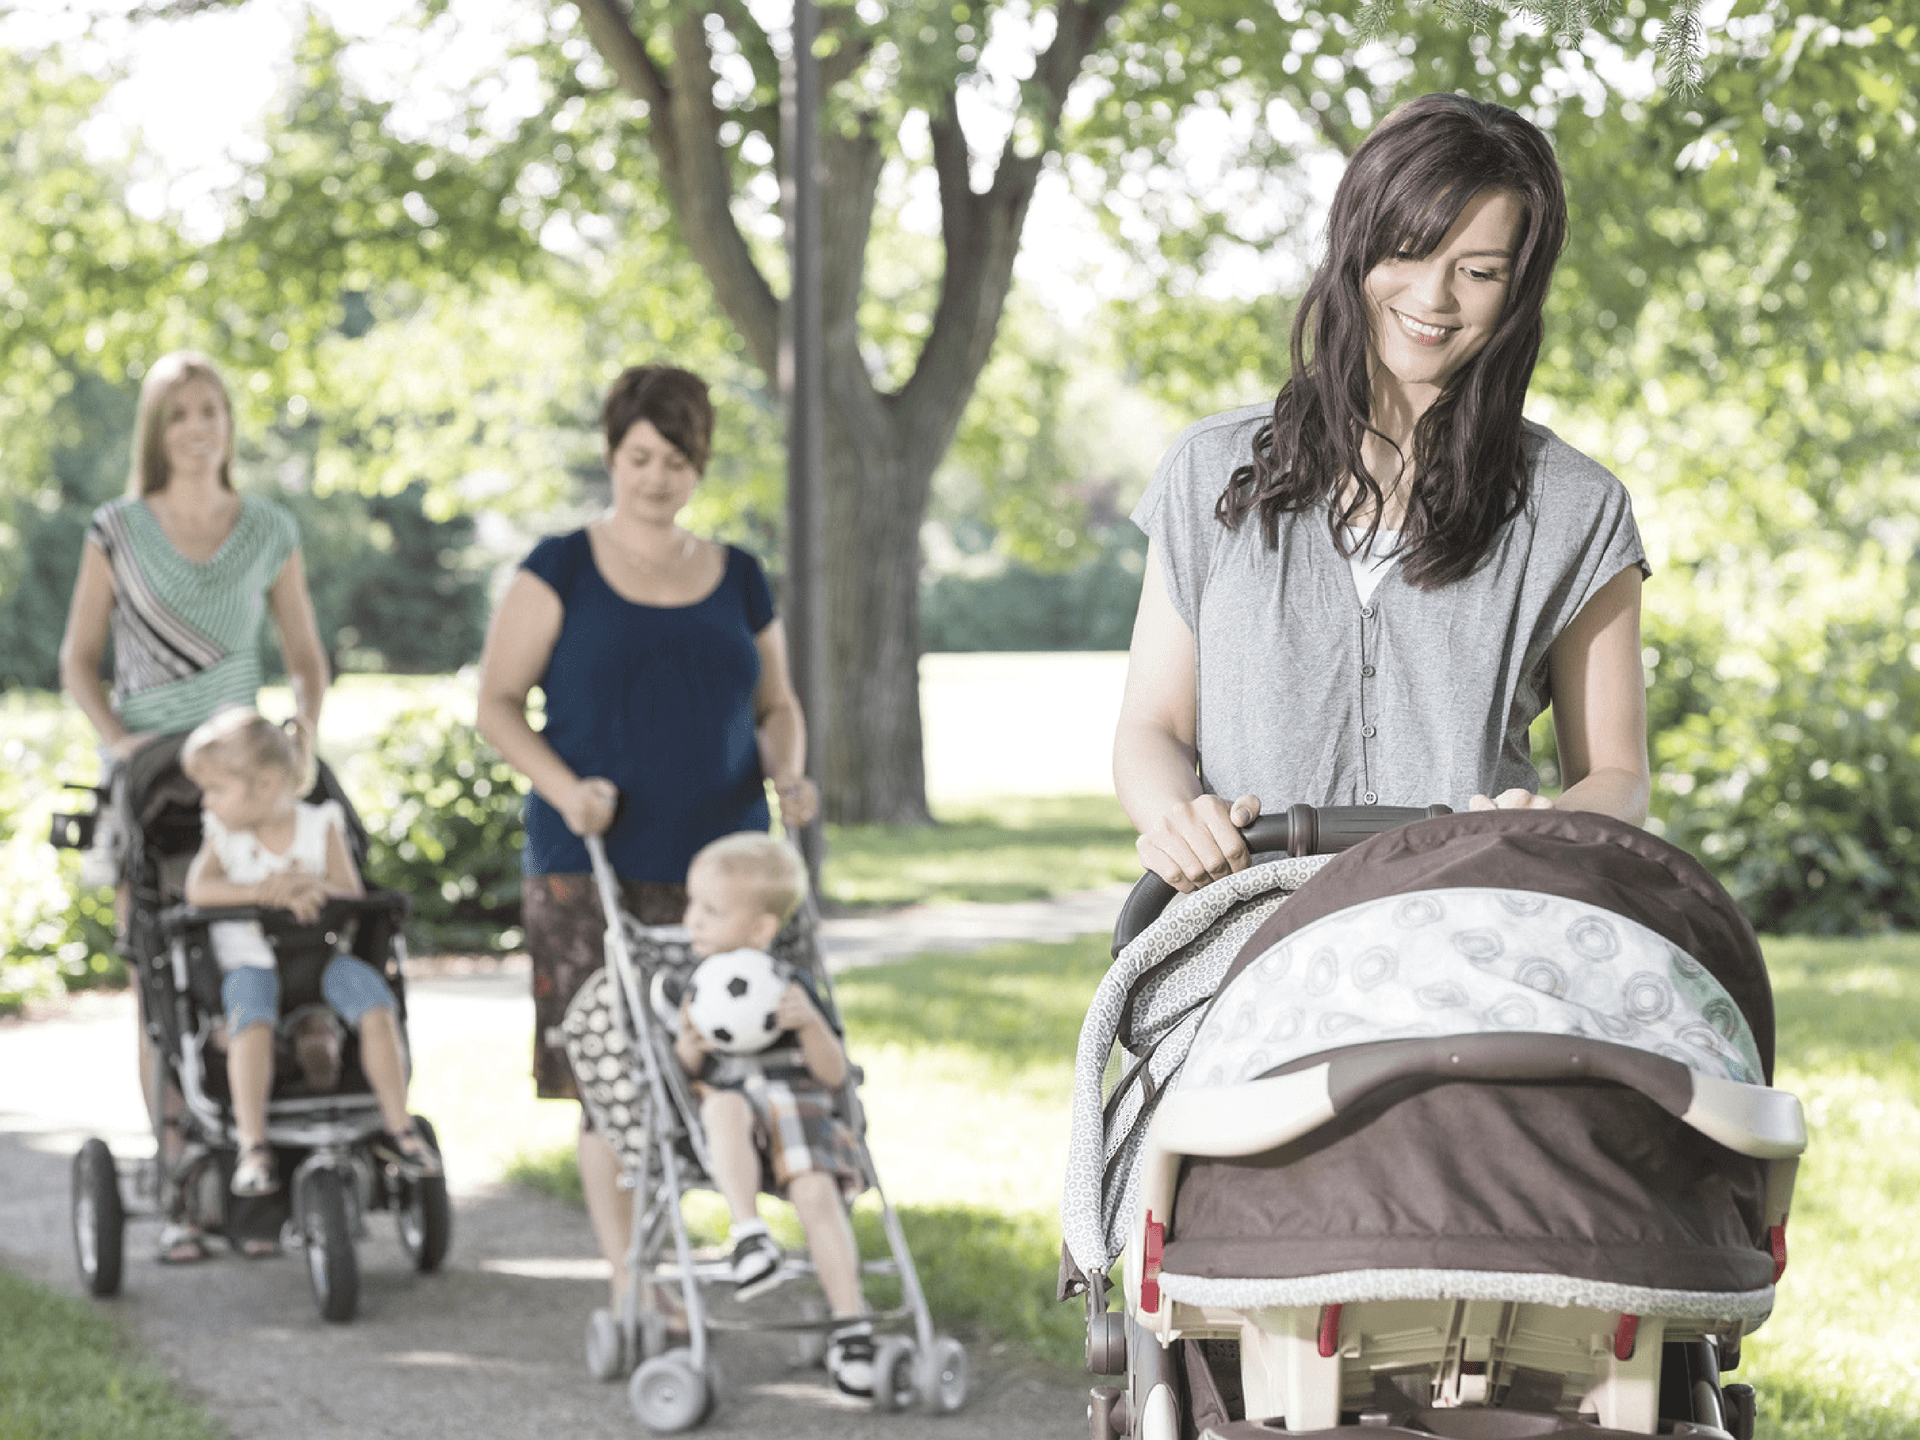 New mom friends. Мамы с колясками на прогулке. Дети на прогулке. Ребенок в коляске. Детская коляска с ребенком.